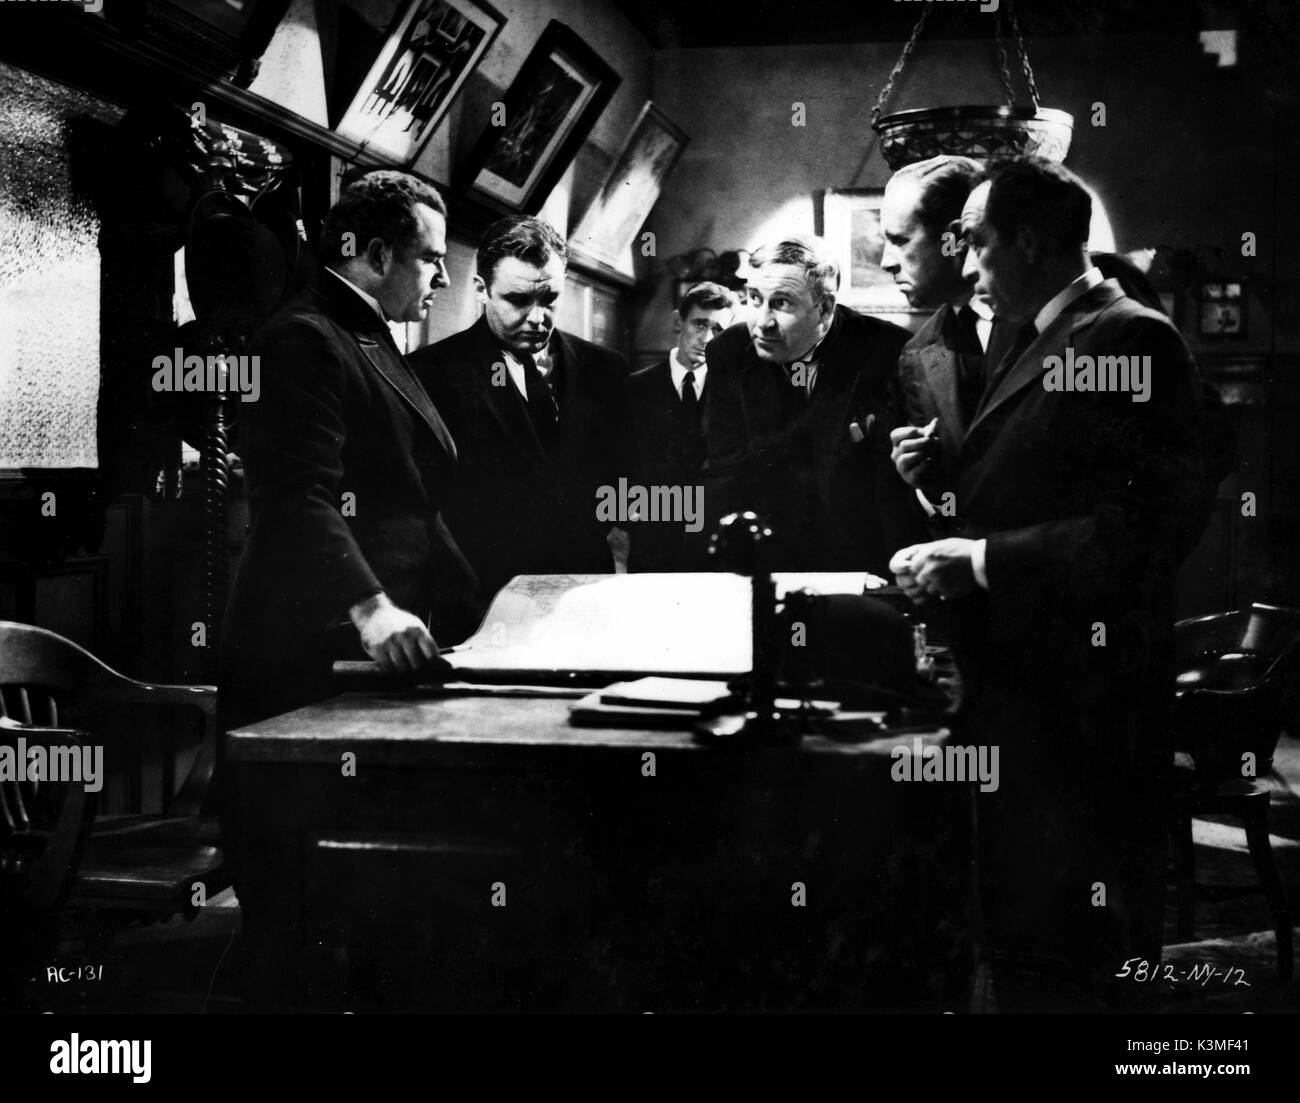 AL CAPONE [US 1959] NEHEMIAH PERSOFF, ROD STEIGER as Al Capone     Date: 1959 Stock Photo